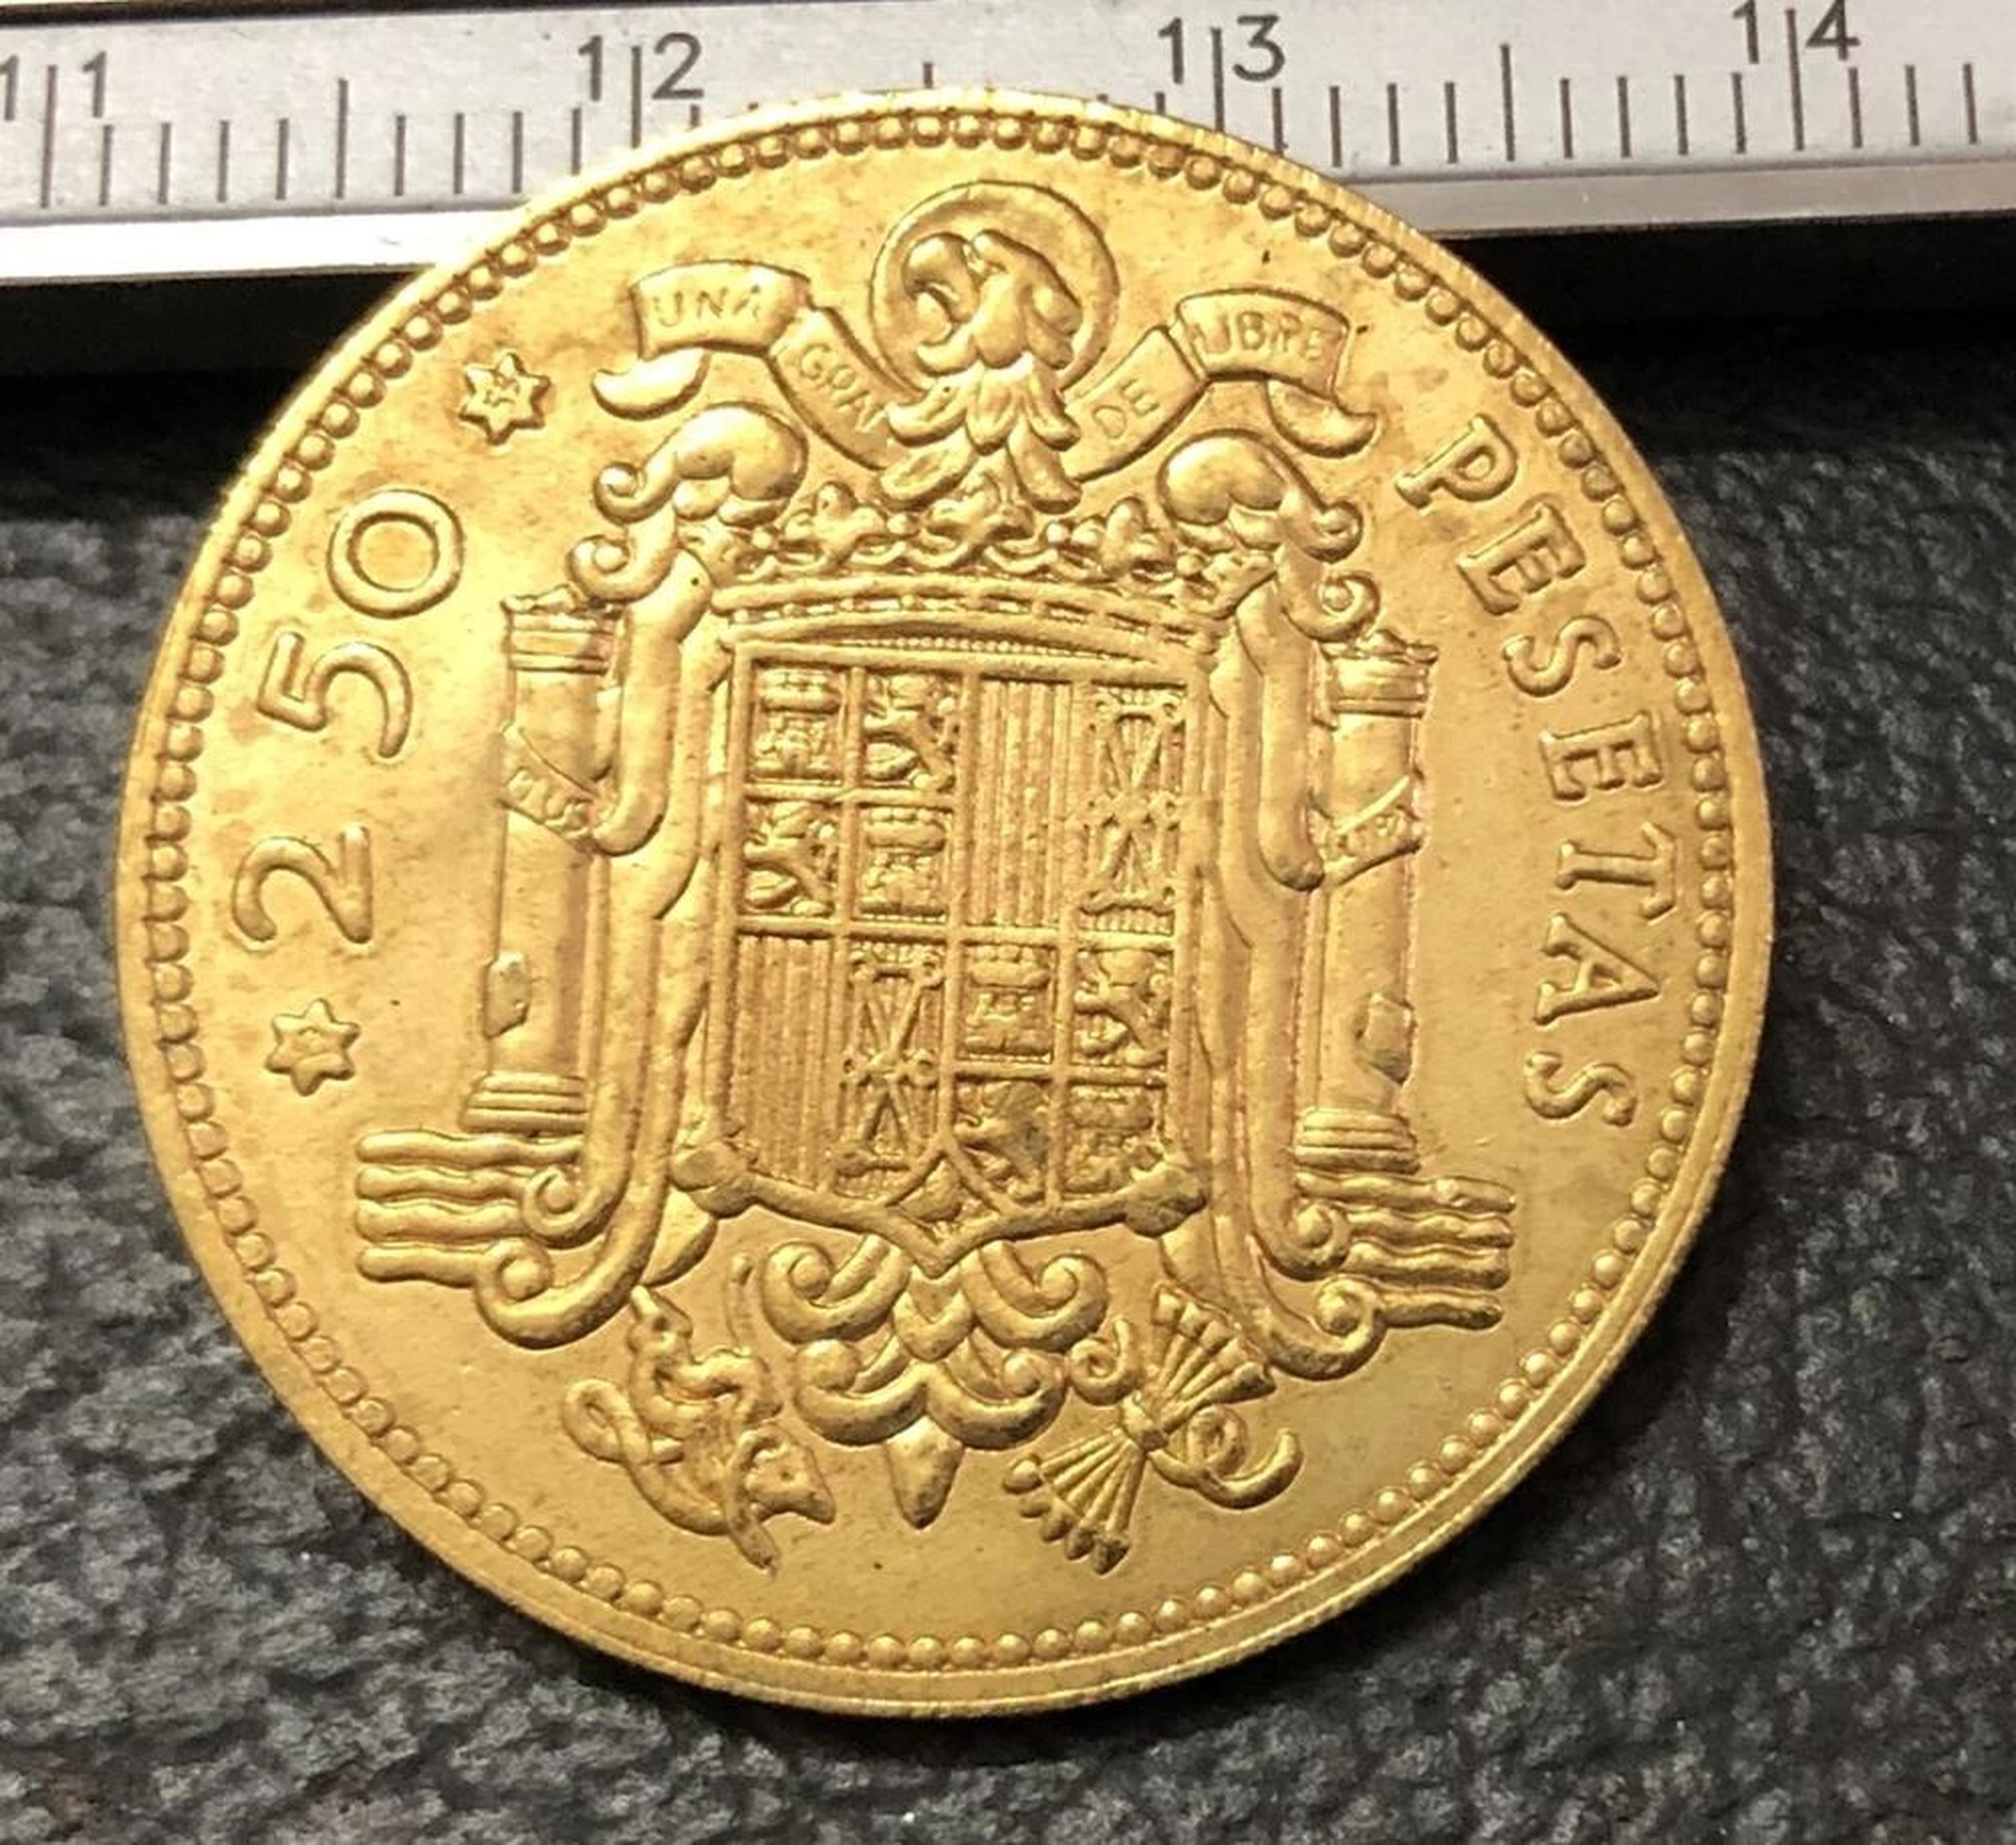 2,5 pesetas de 1953